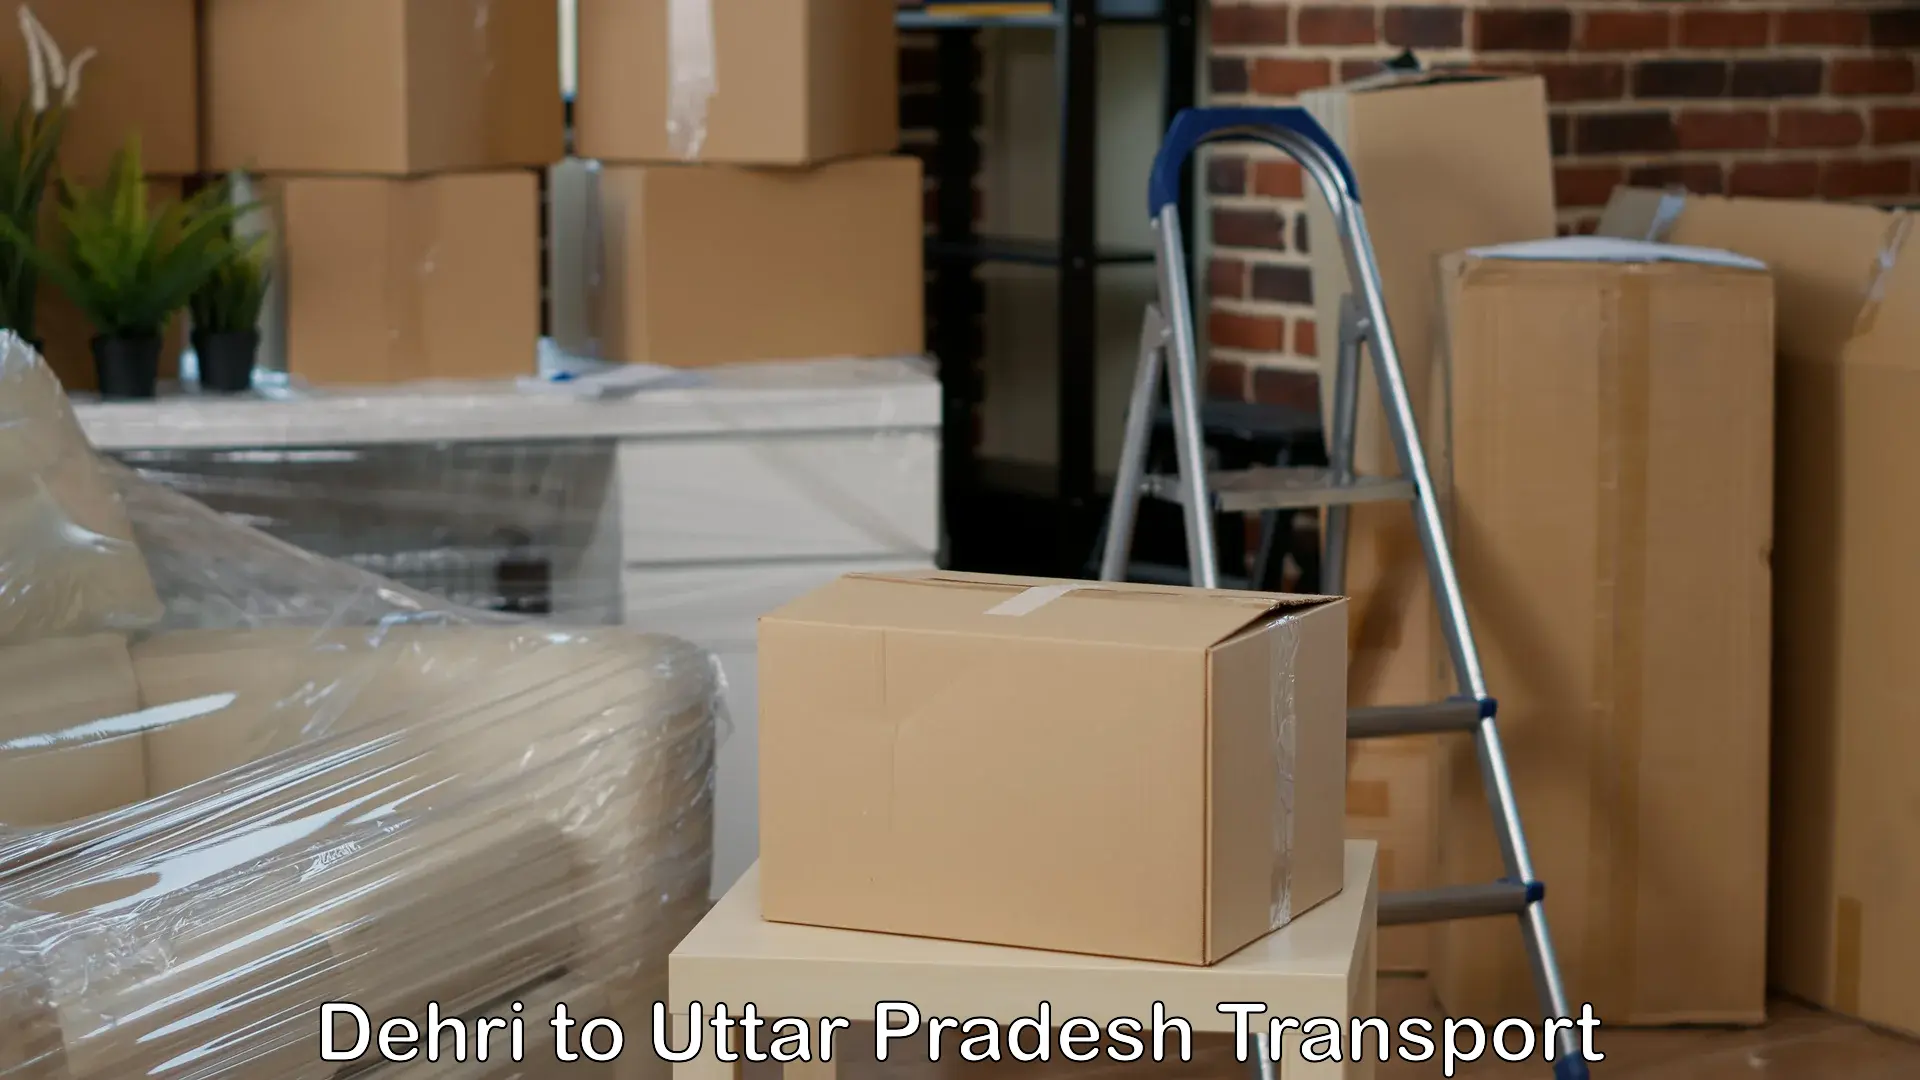 Shipping partner in Dehri to Meerut